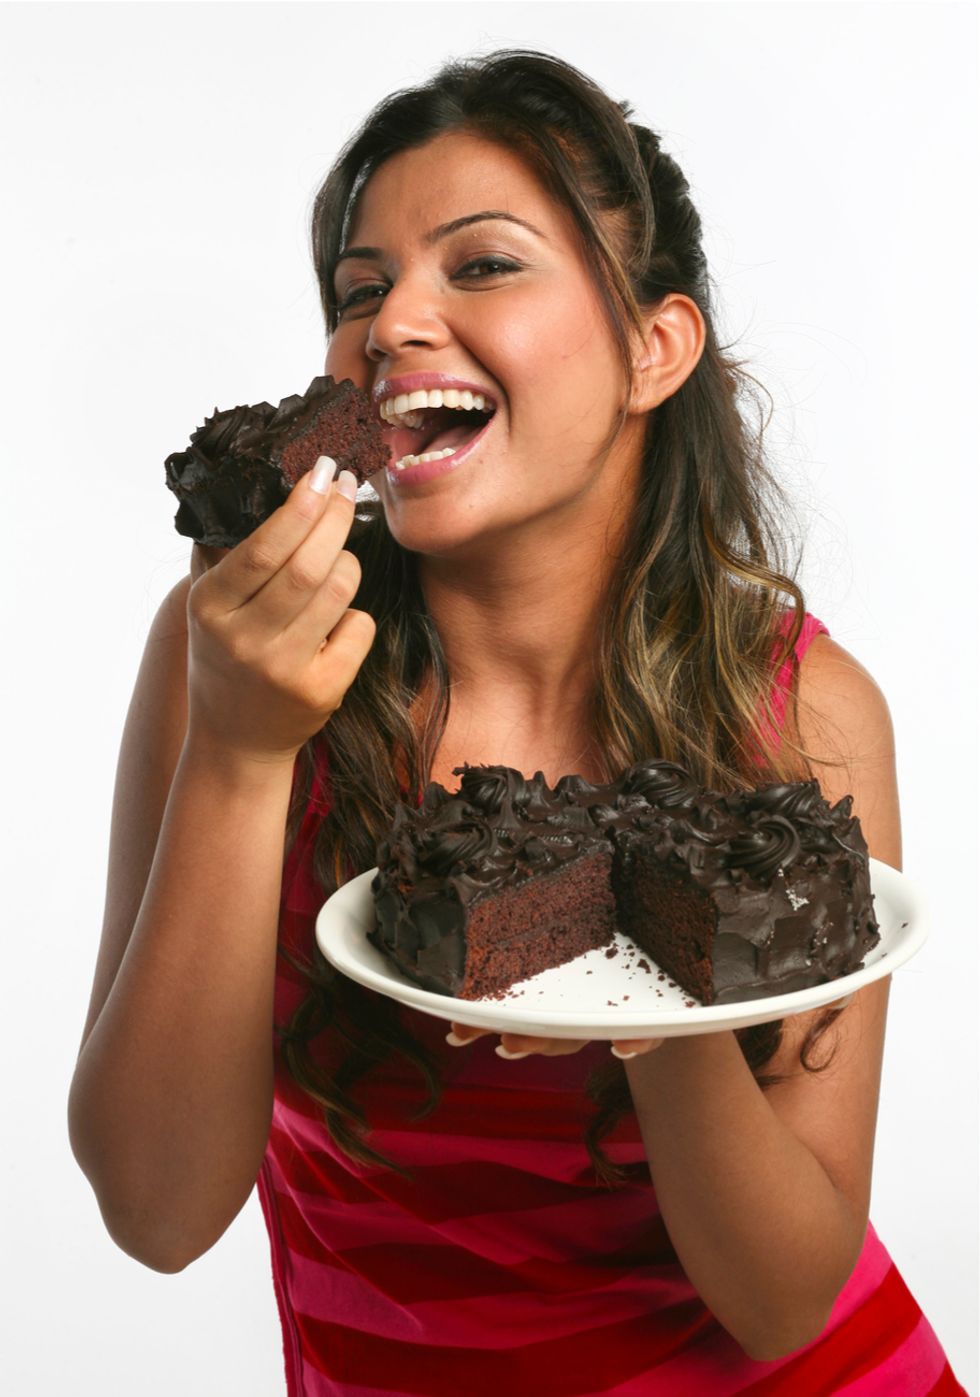 Lower calorie desserts